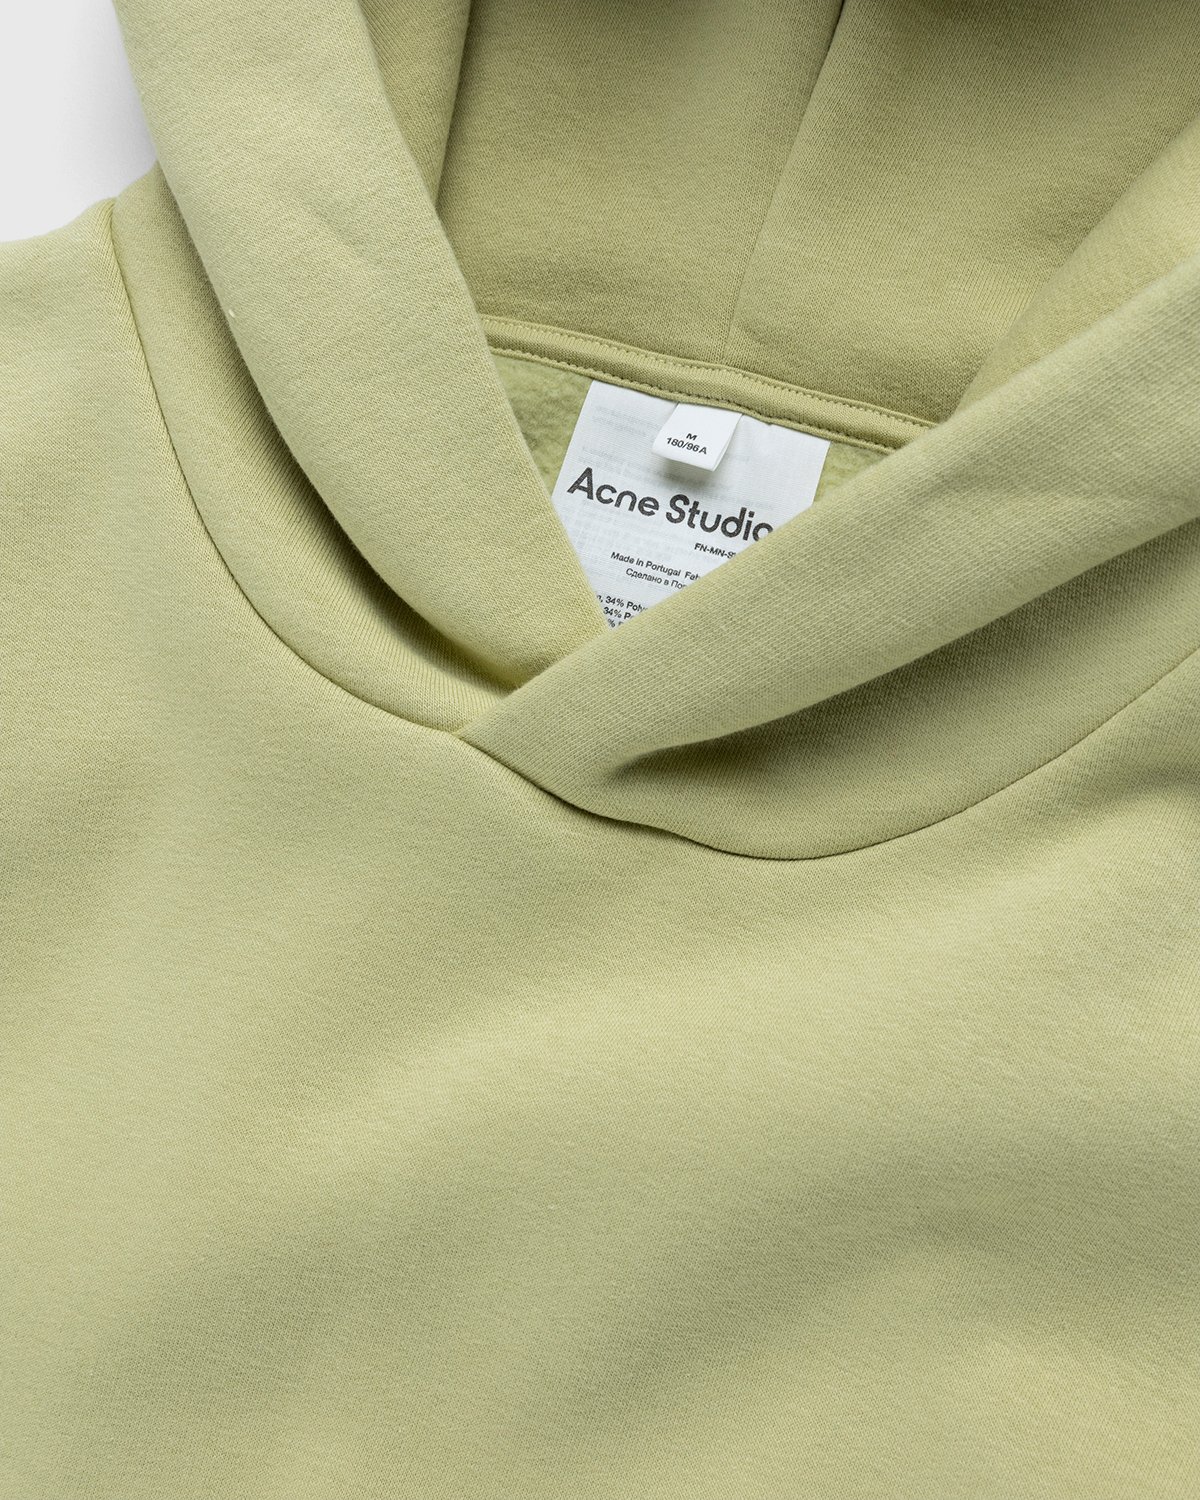 Acne Studios - Midweight Fleece Hooded Sweatshirt Pale Green - Clothing - Green - Image 3